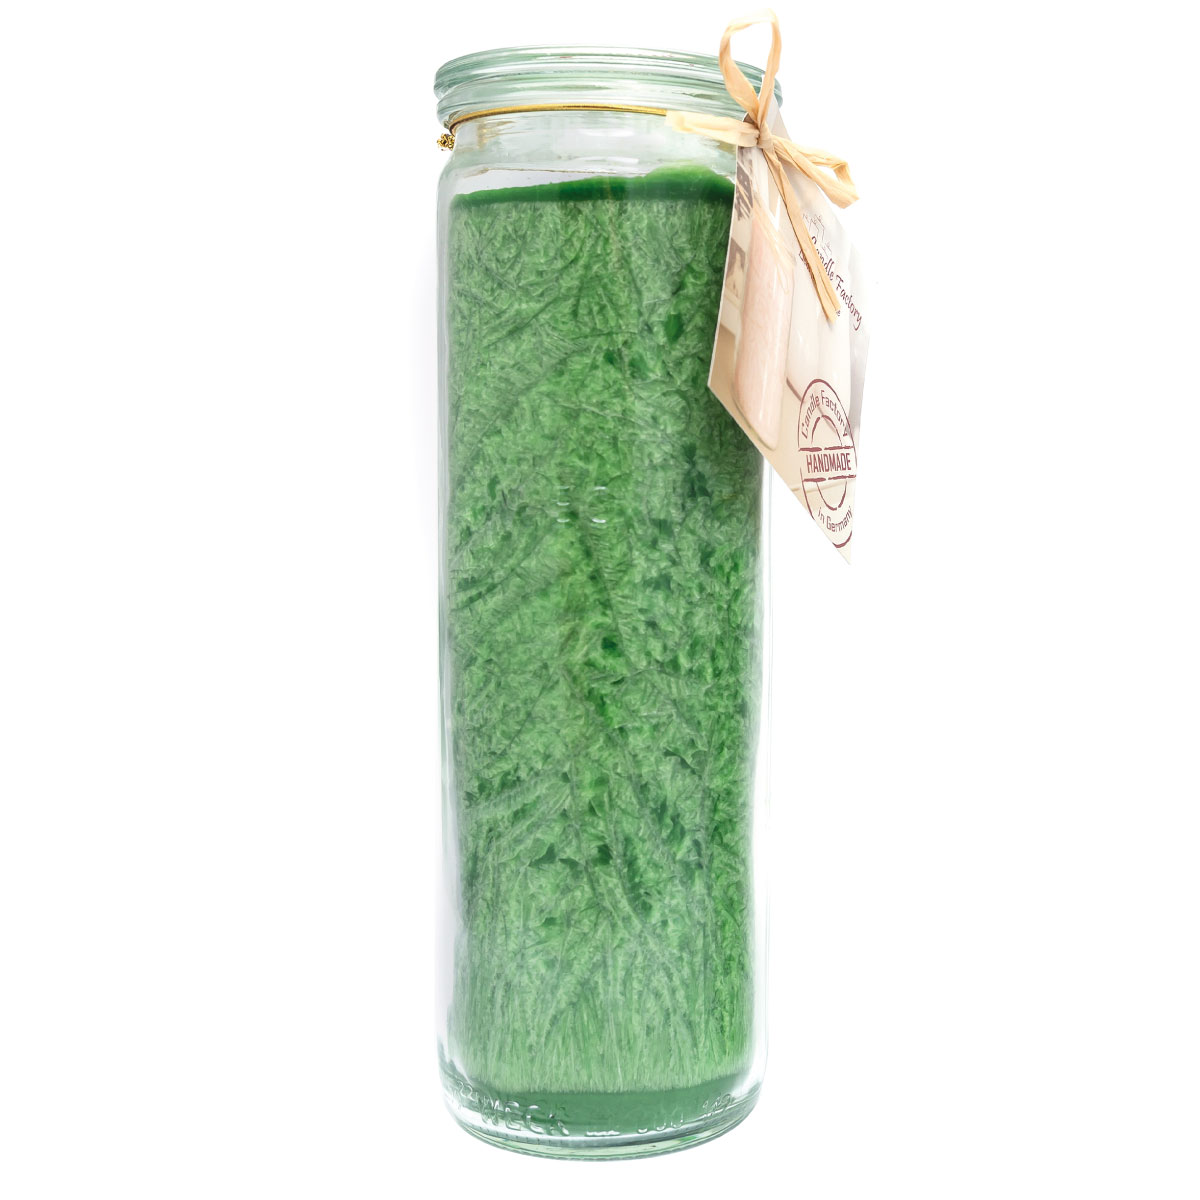 Wiesengrün Duftlos - Big Jumbo Kerze im Weckglas